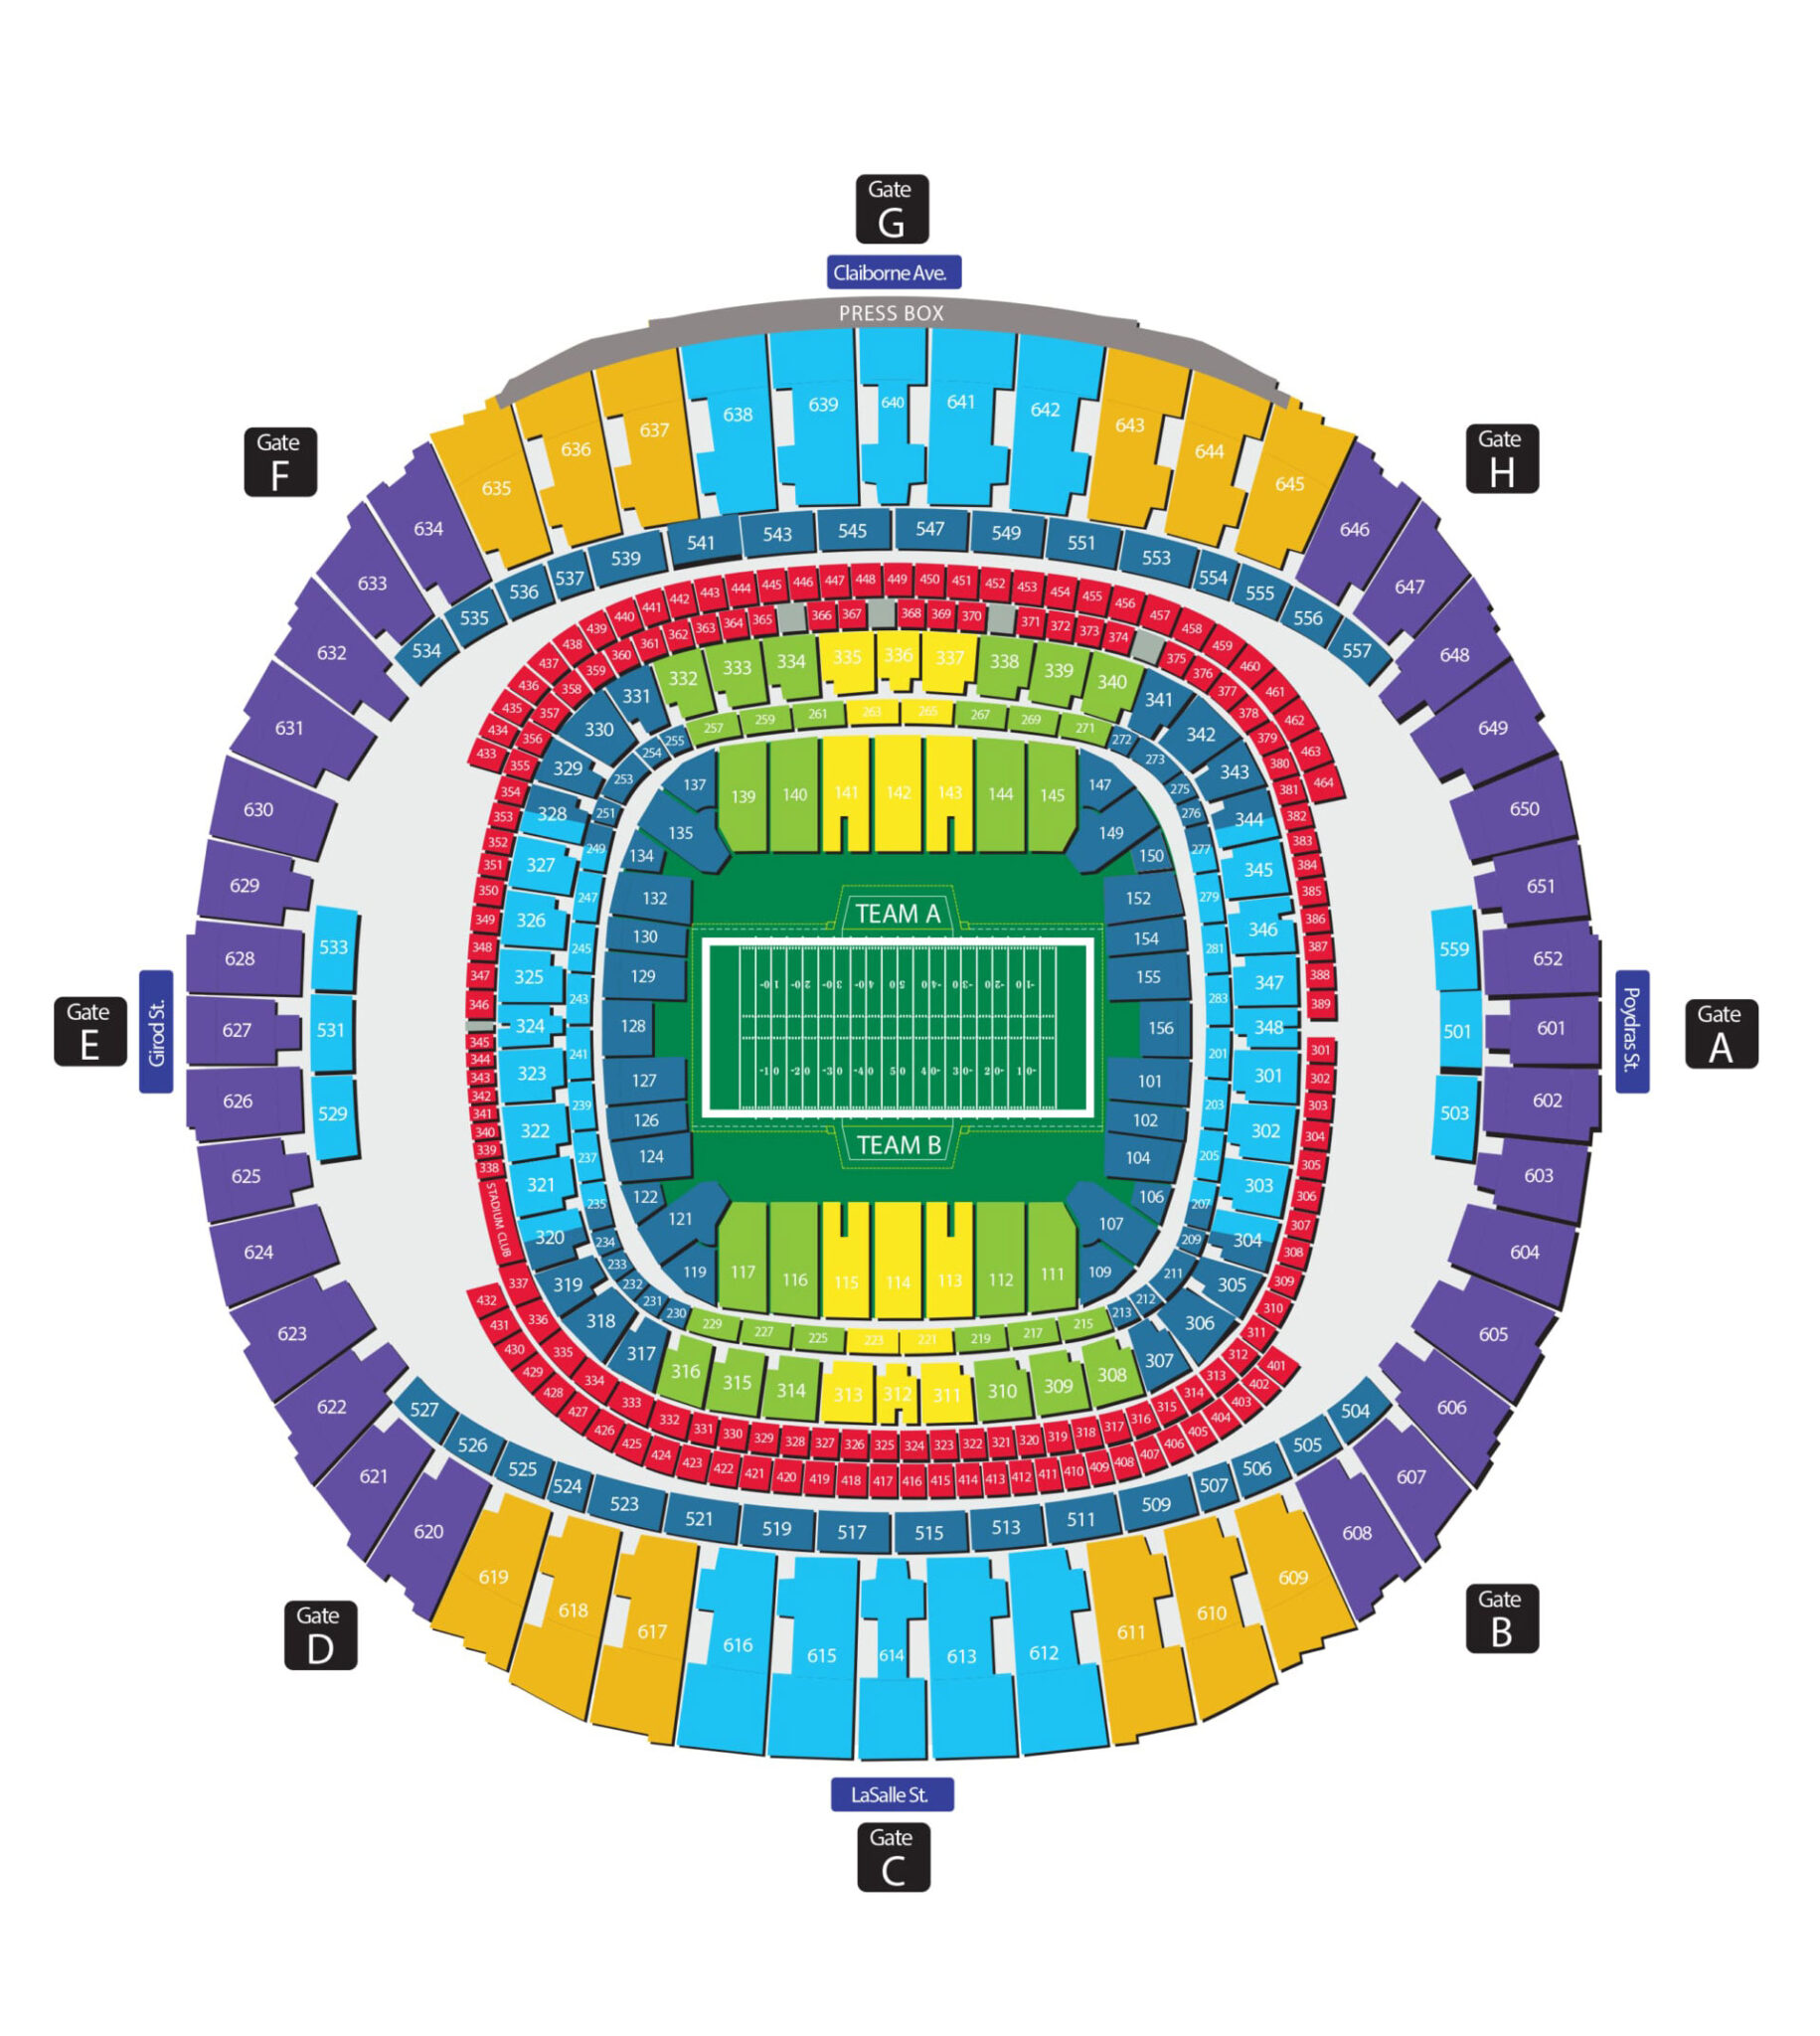 MercedesBenz Superdome Seating Plan Seating plans of Sport arenas